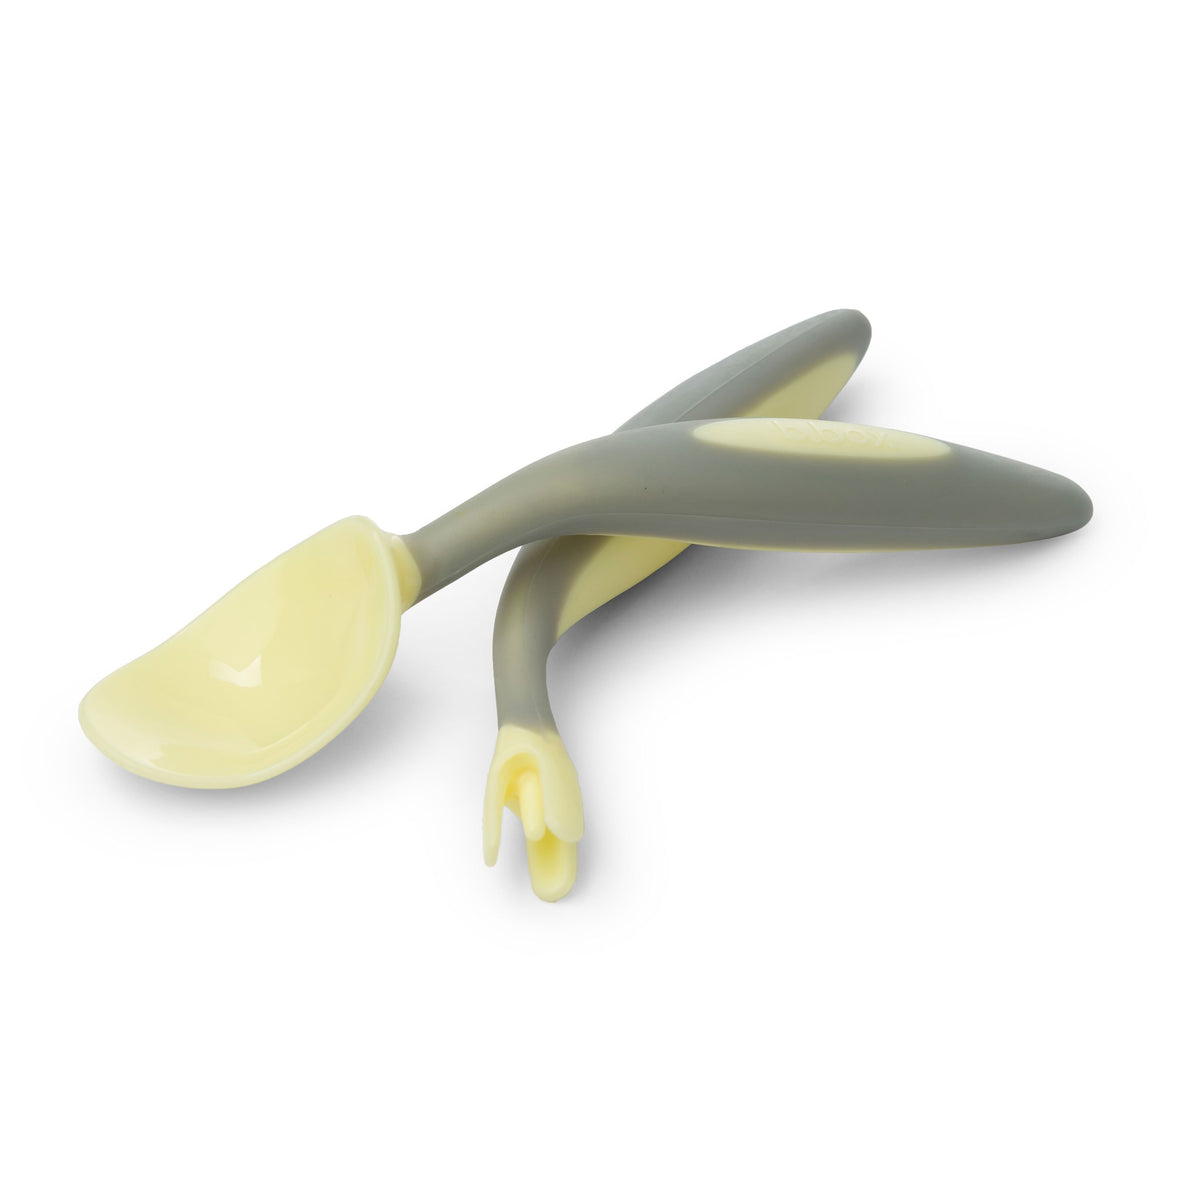 b.box Cutlery Set - Gelato Yellow - Banana Split